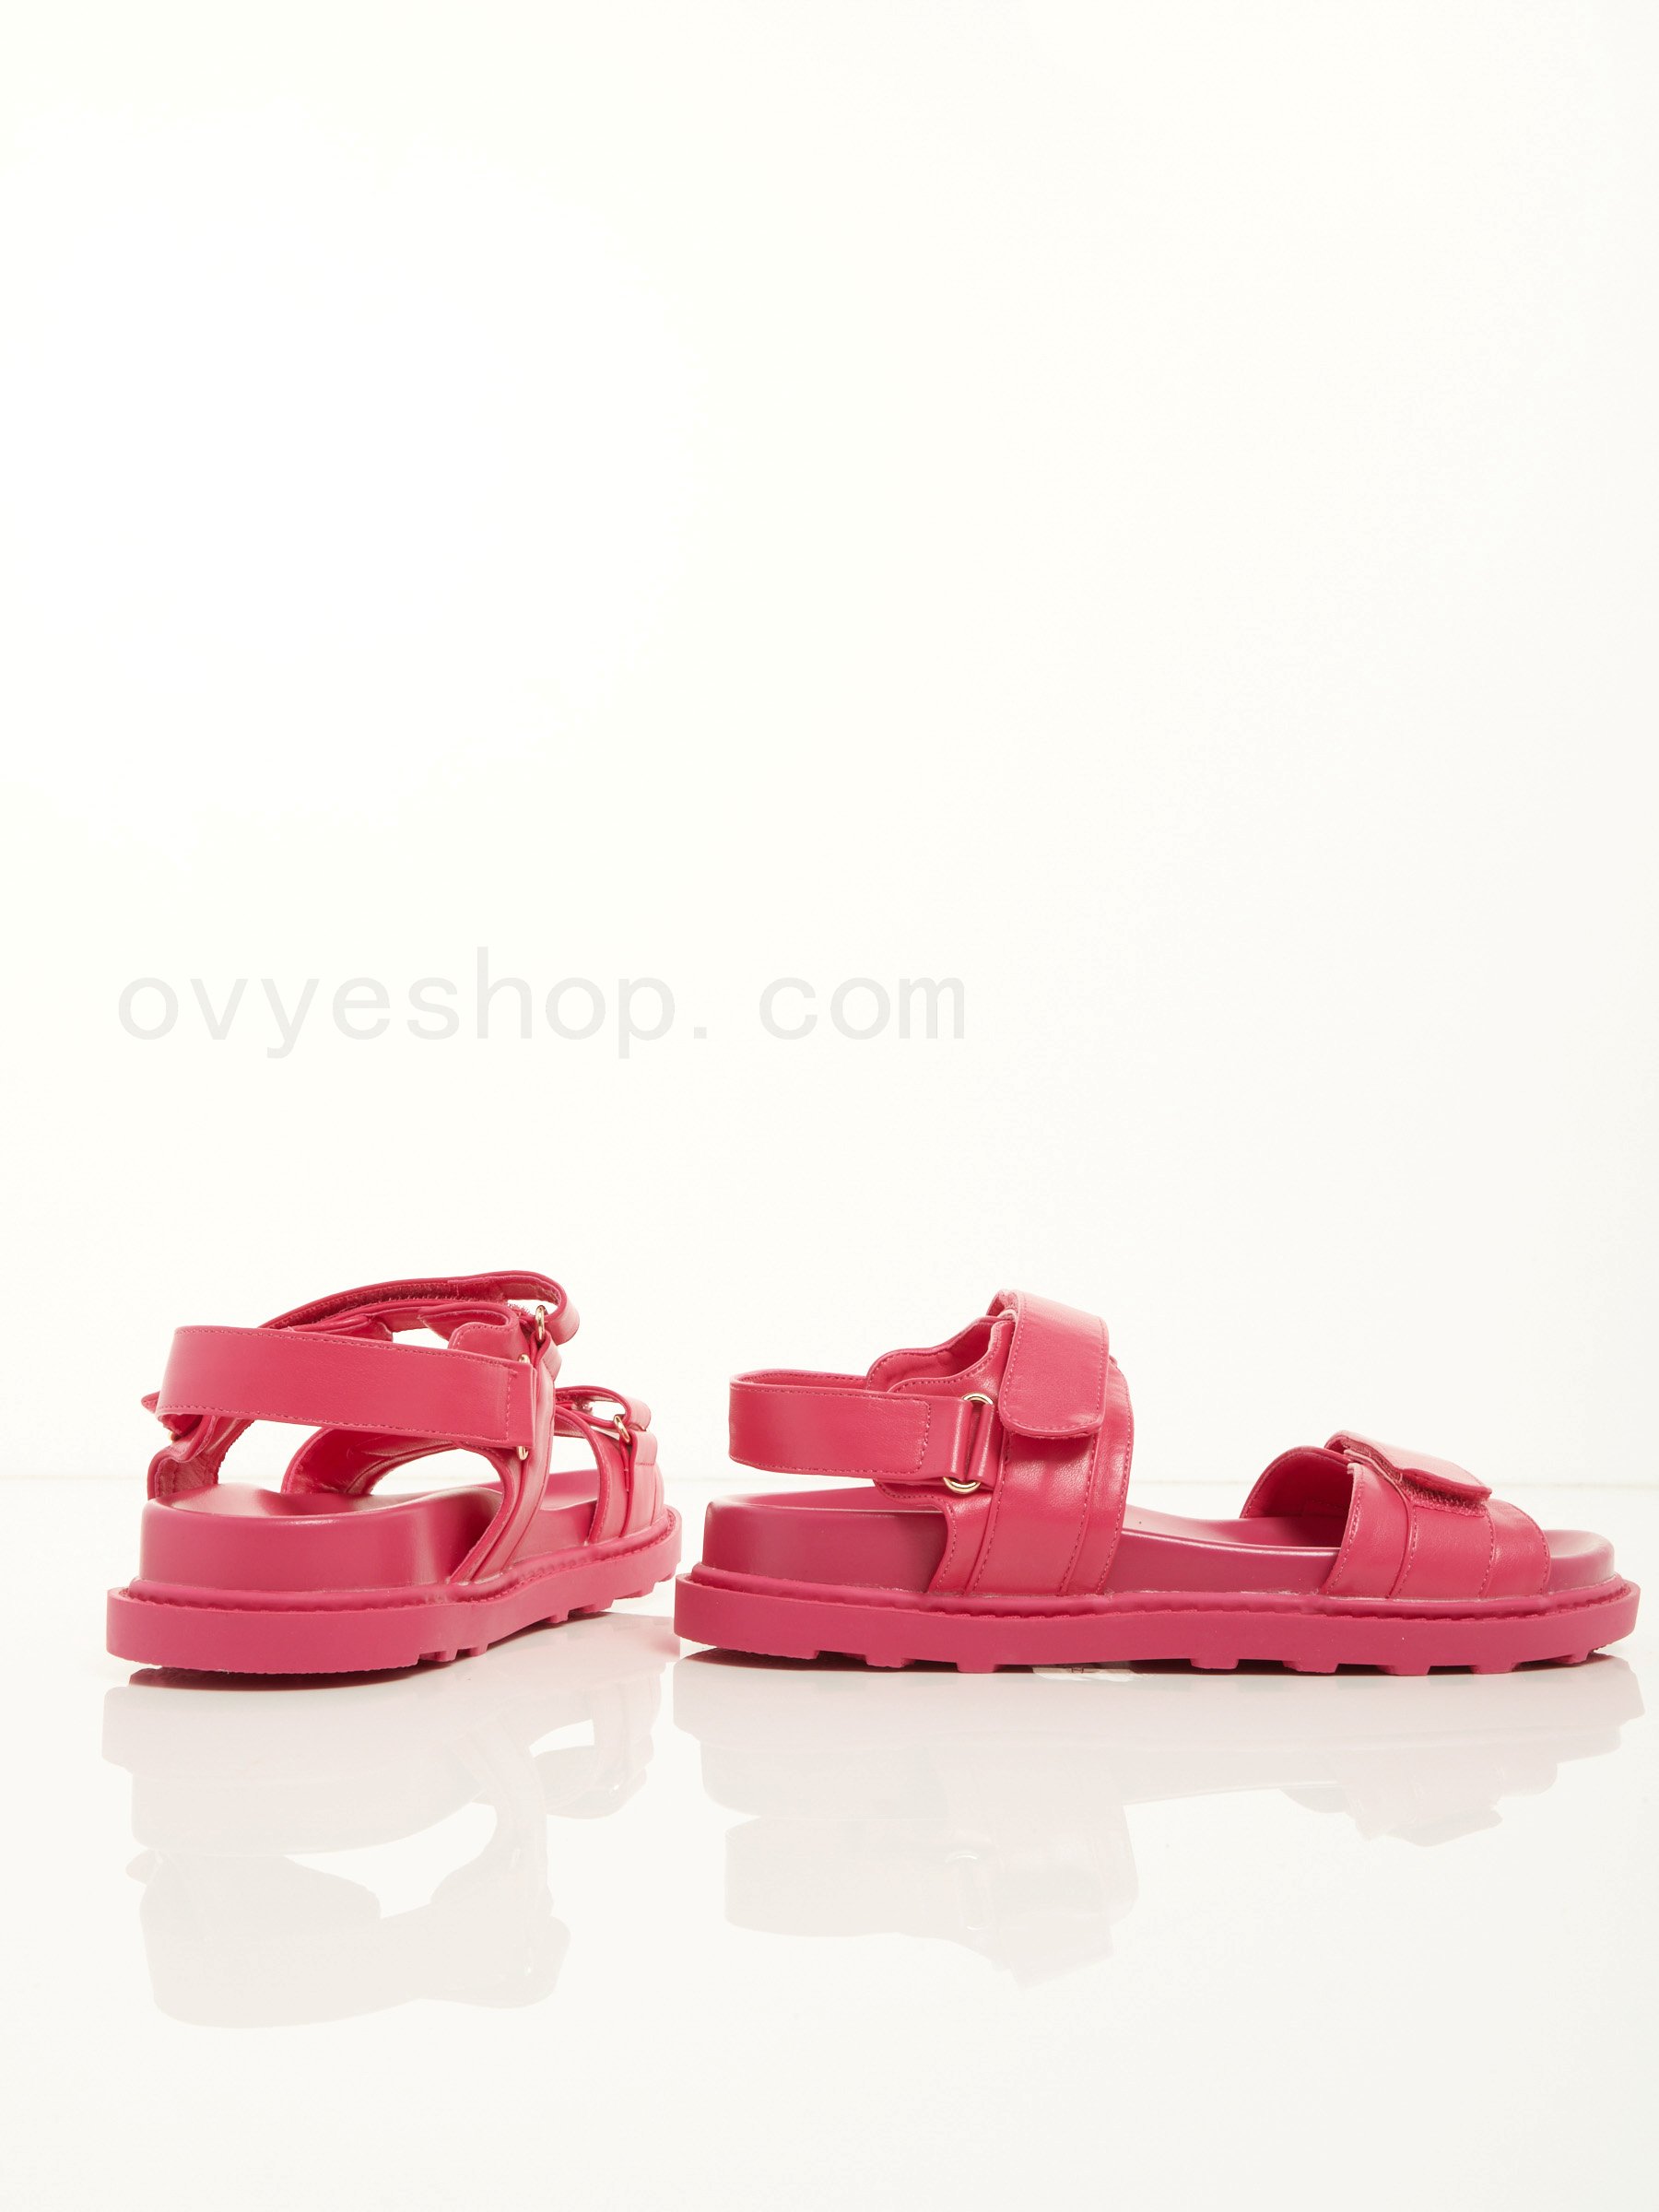 ovye scarpe shop online Sandal With Rips F0817885-0449